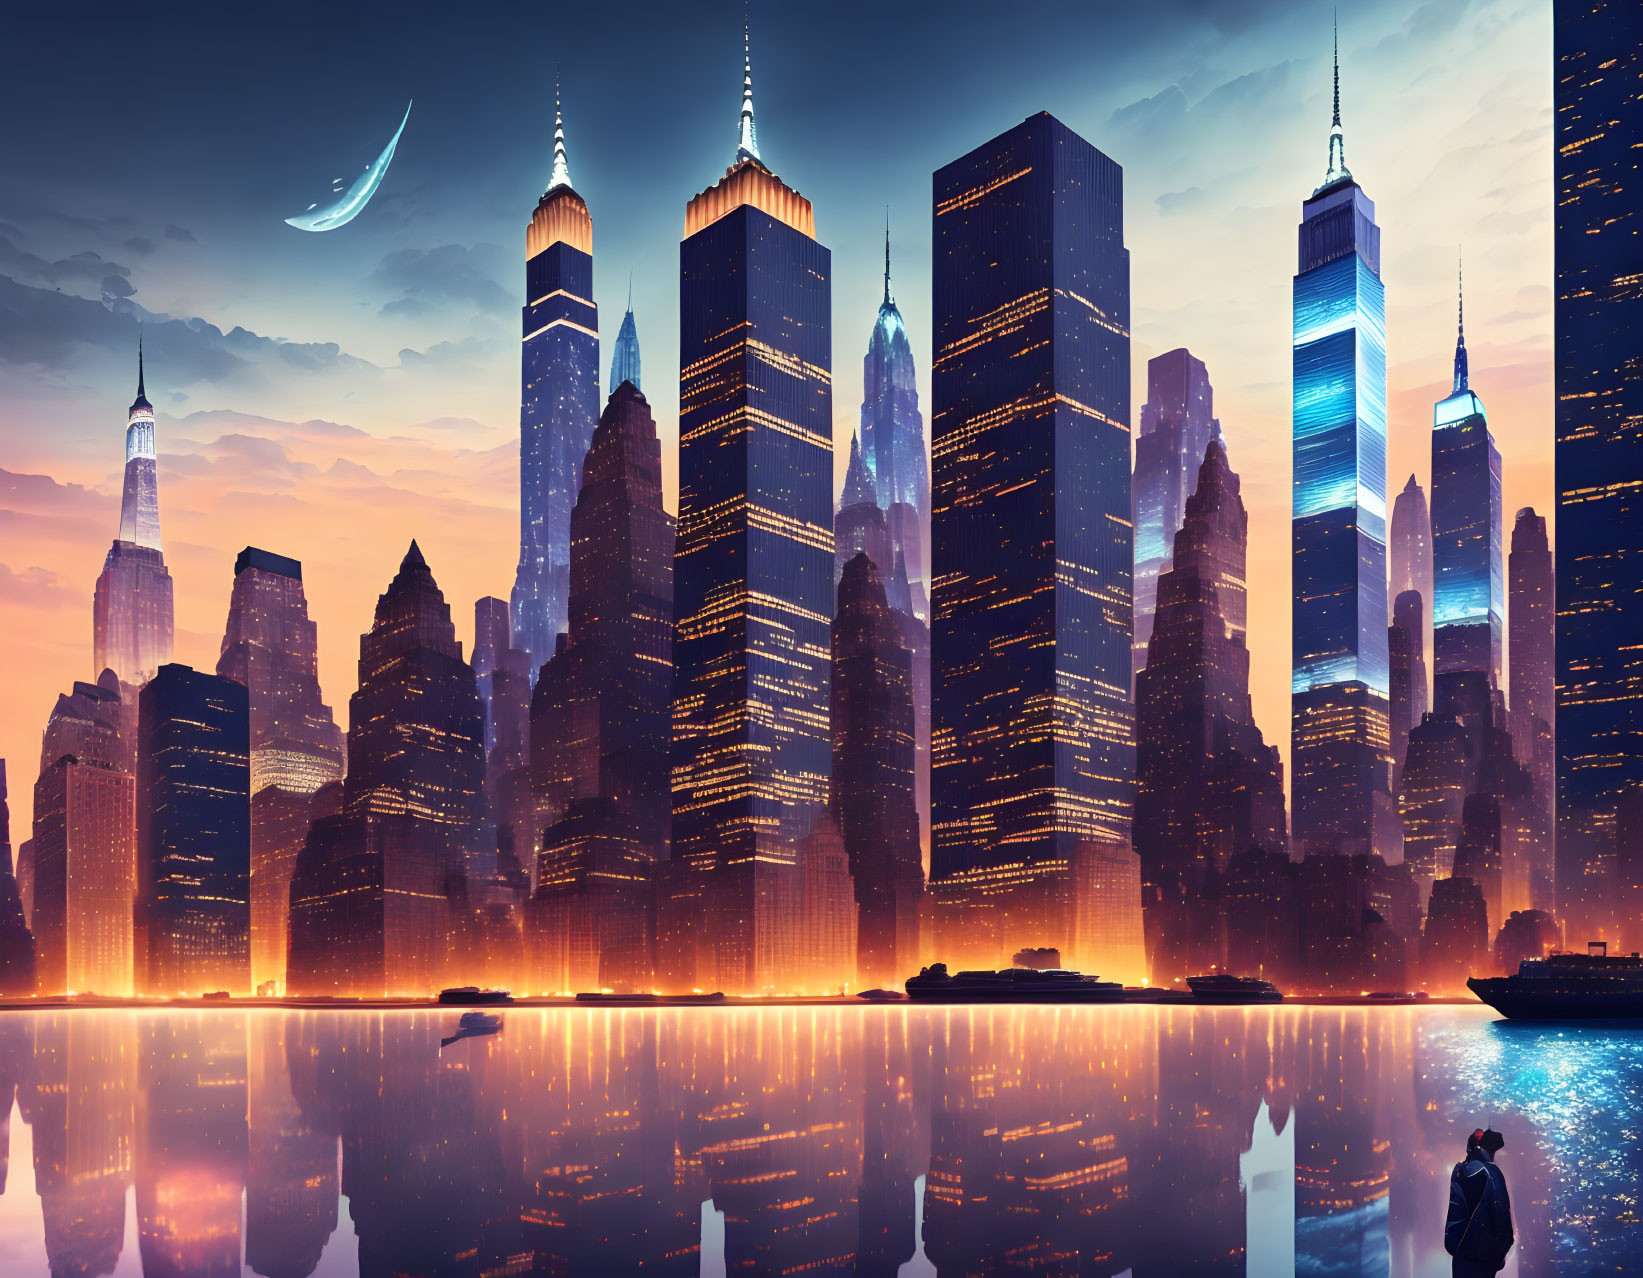 Illuminated futuristic city skyline with fantastical elements